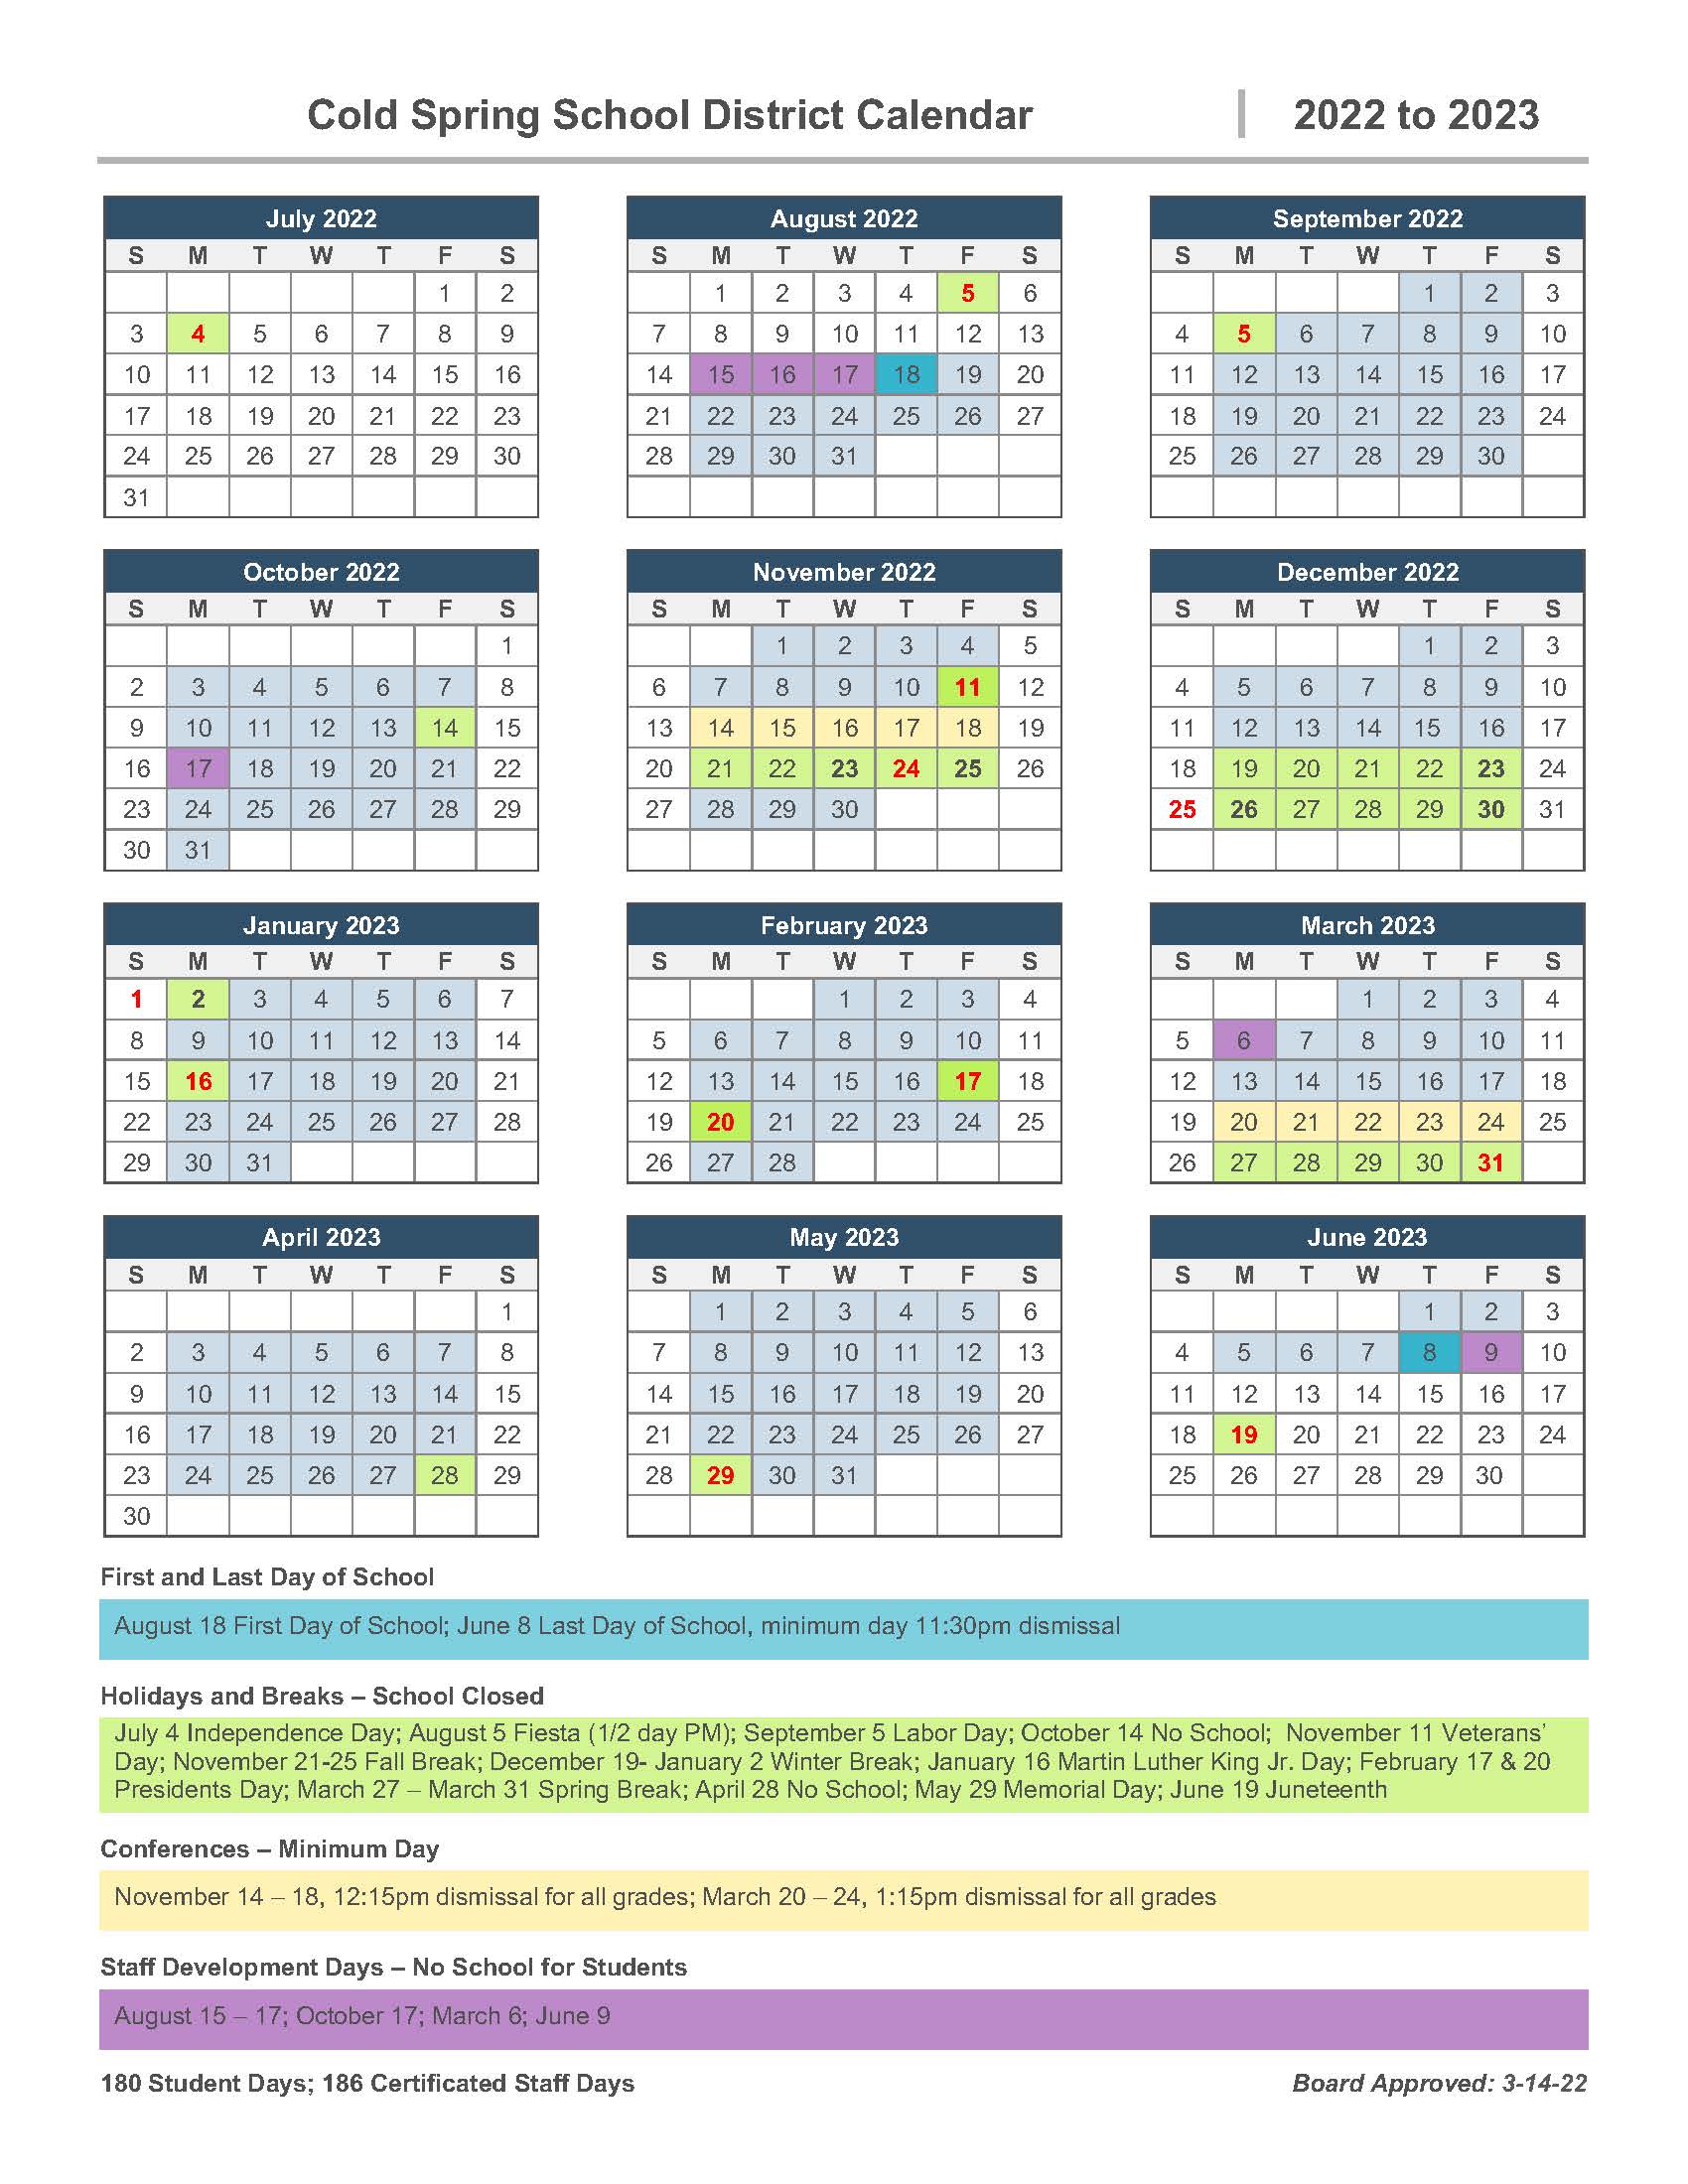 School Calendar for 2022-23